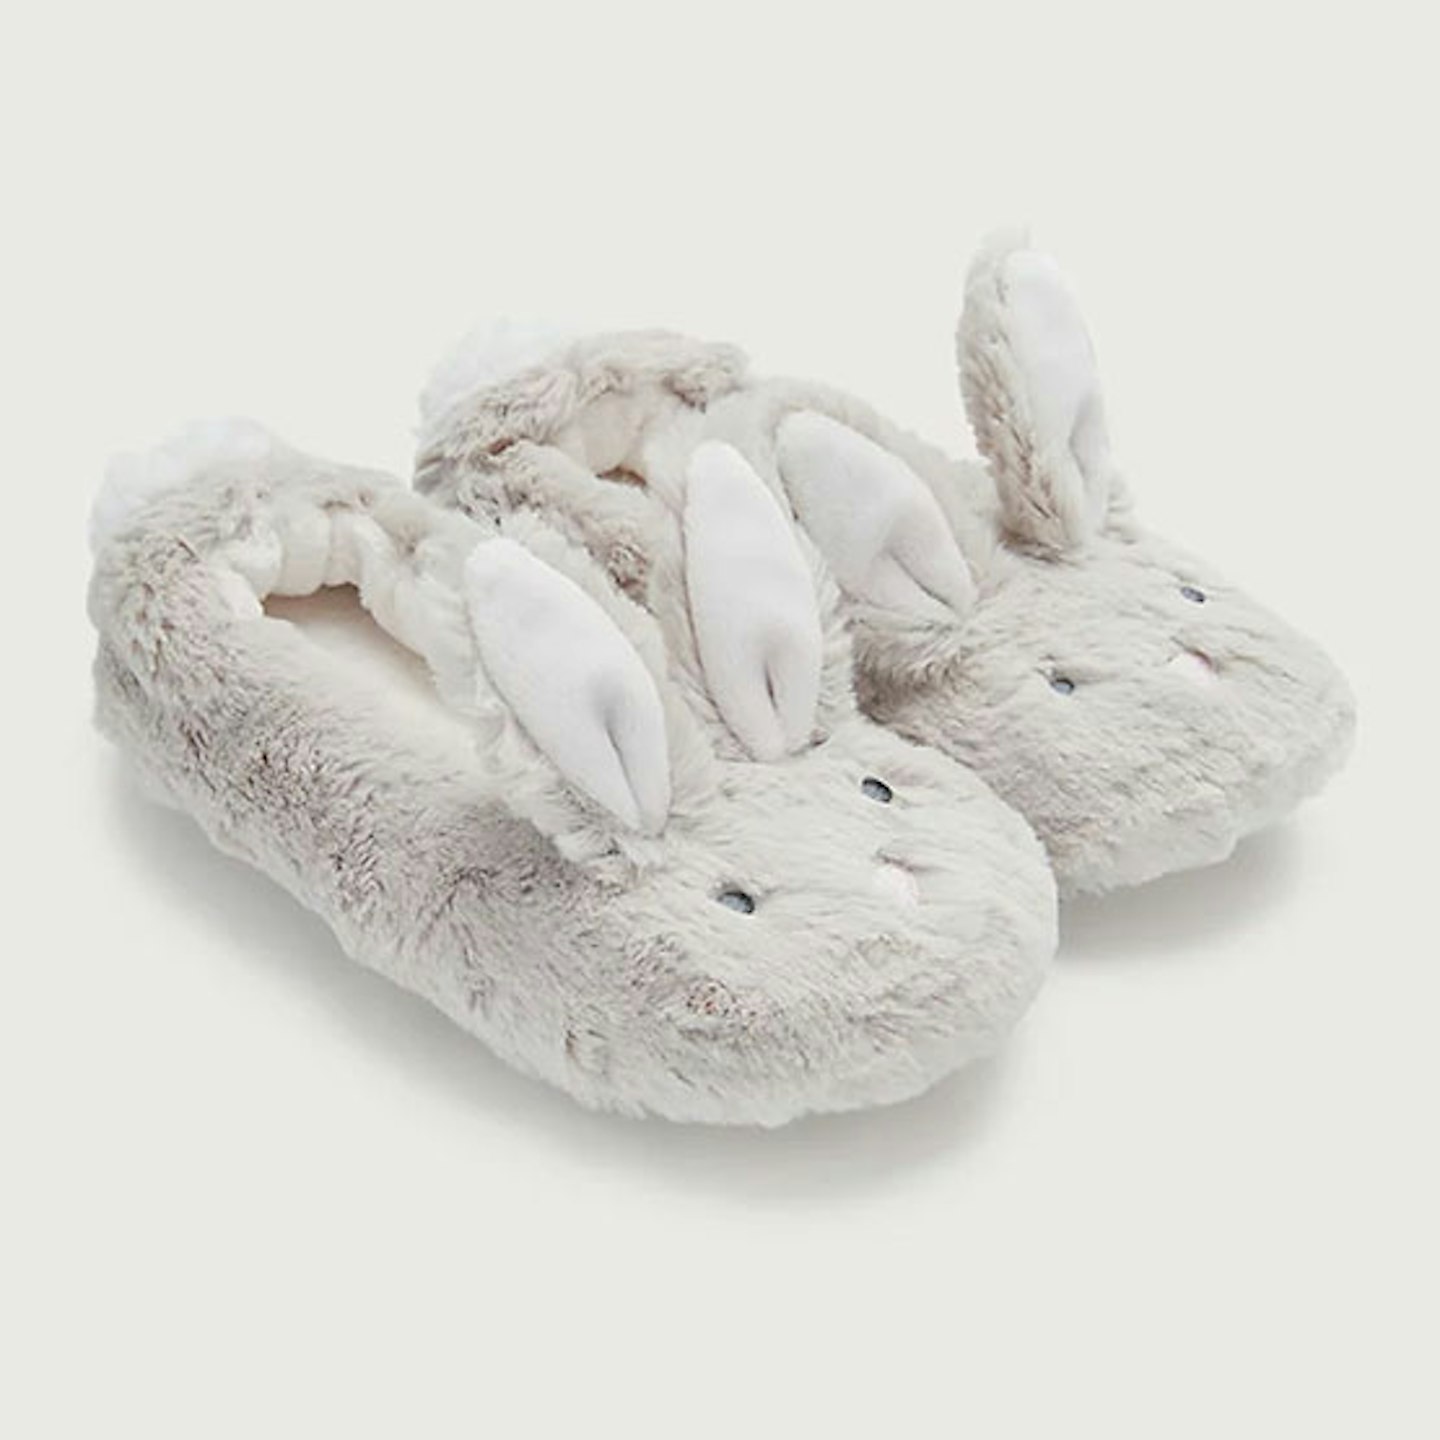 Fluffy bunny slippers